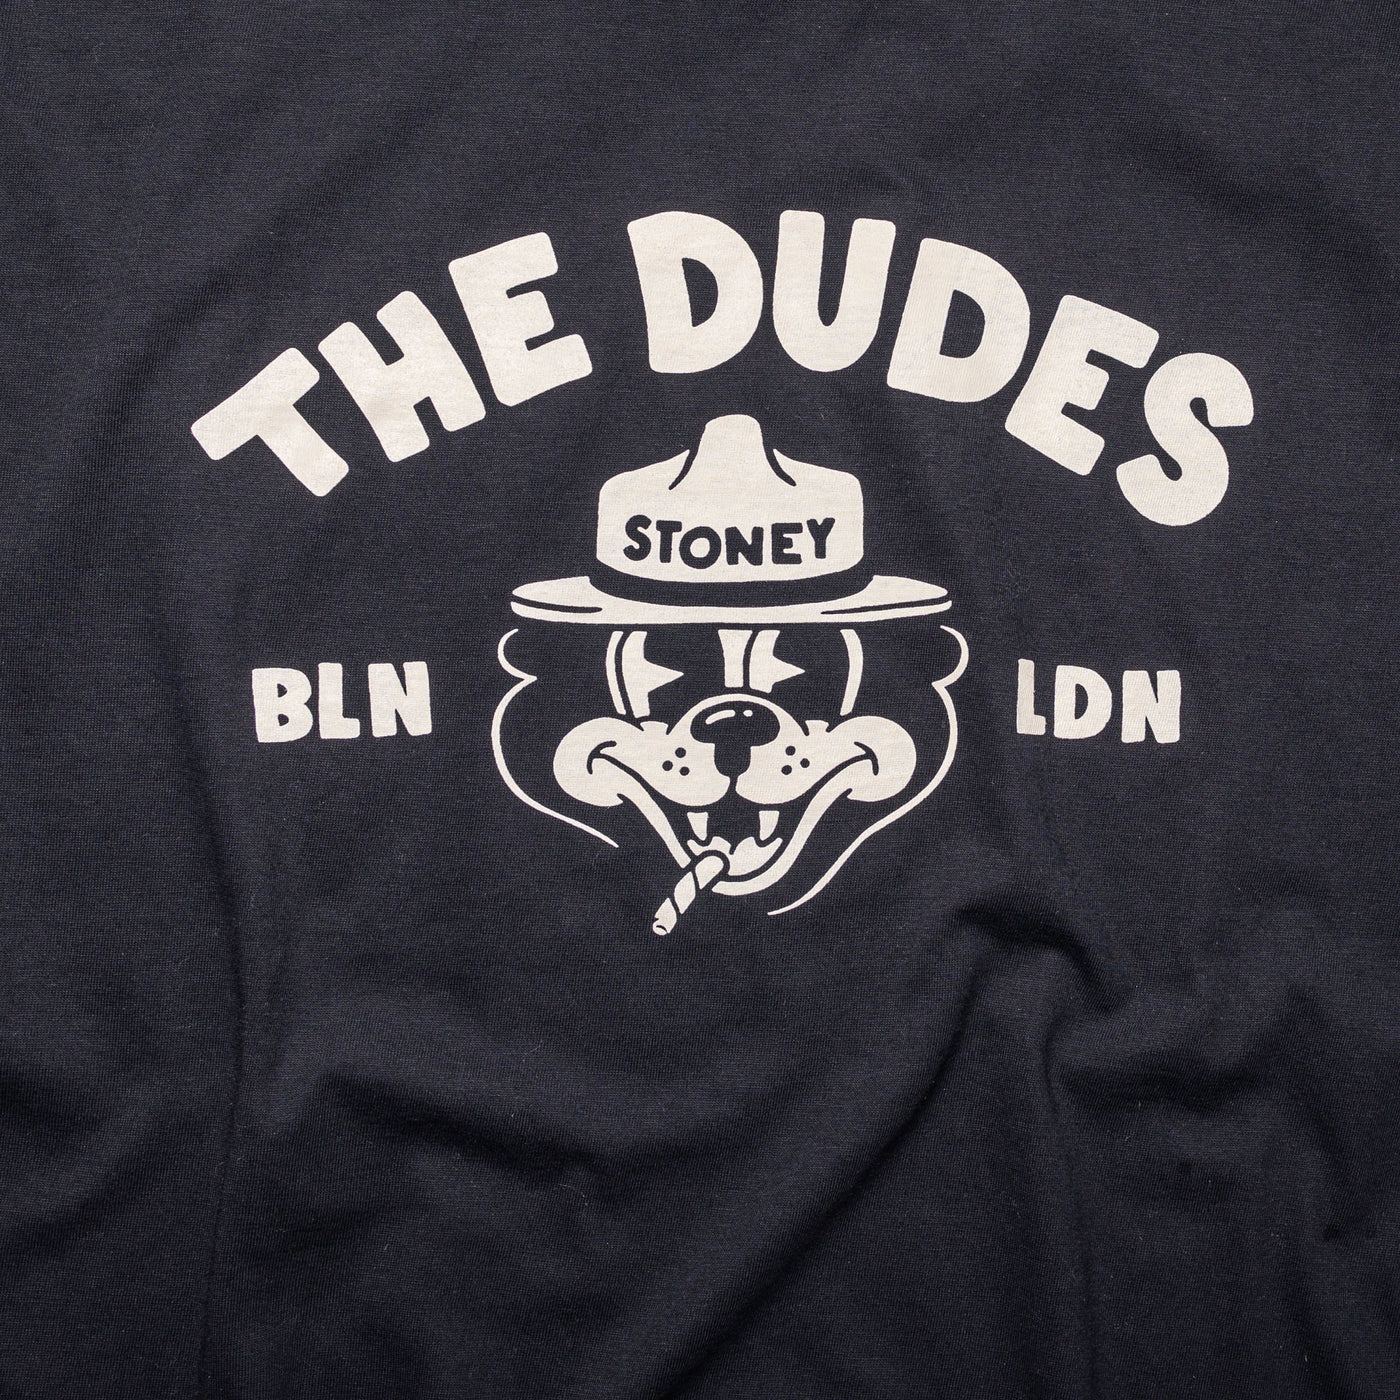 DUDES - T-shirt - Stoney - Sort